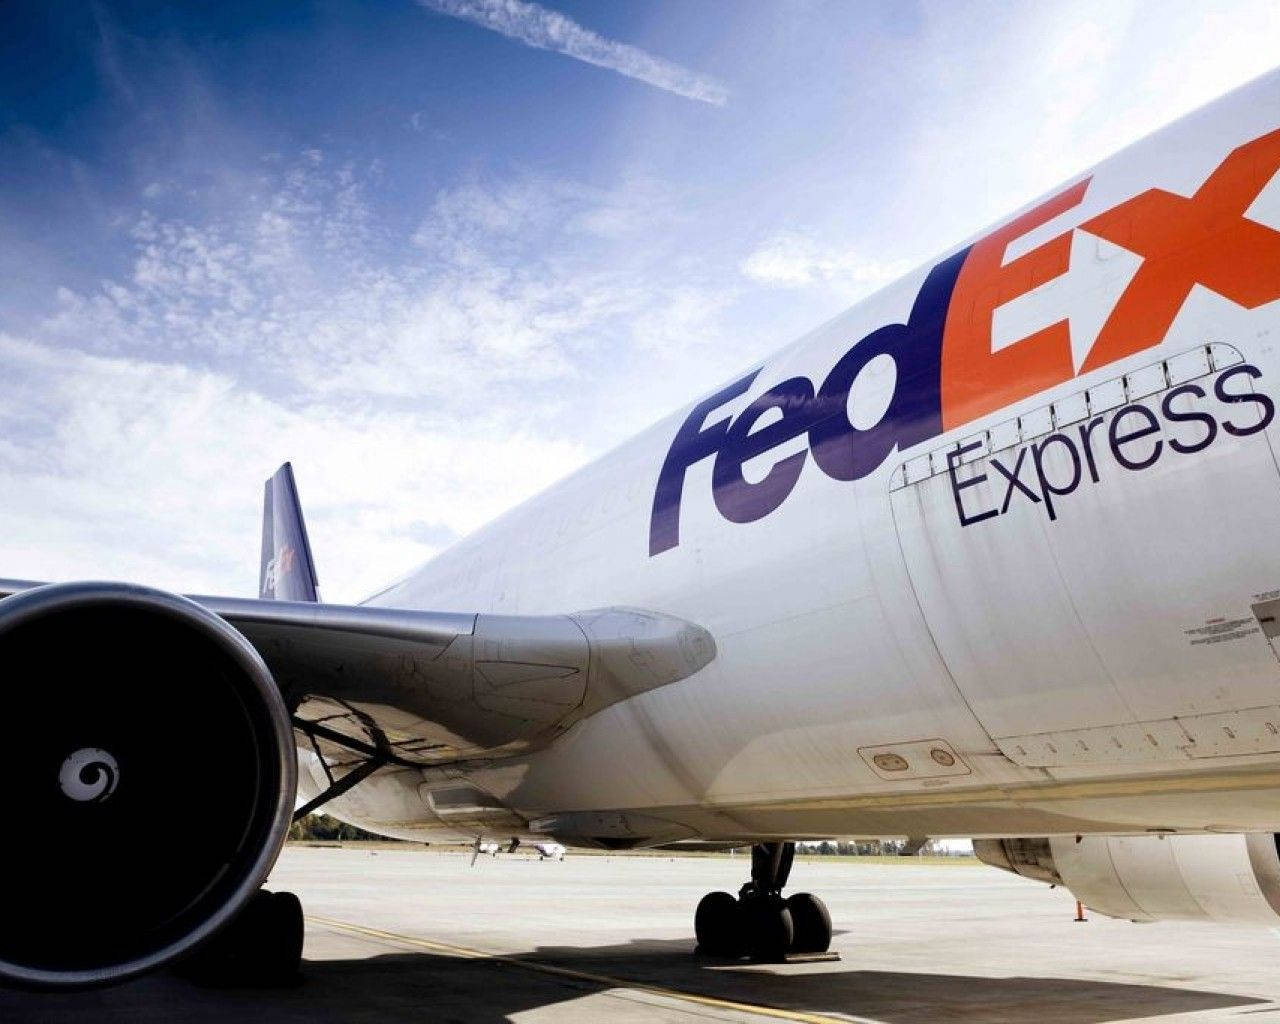 Fedex Express Airplane Side View